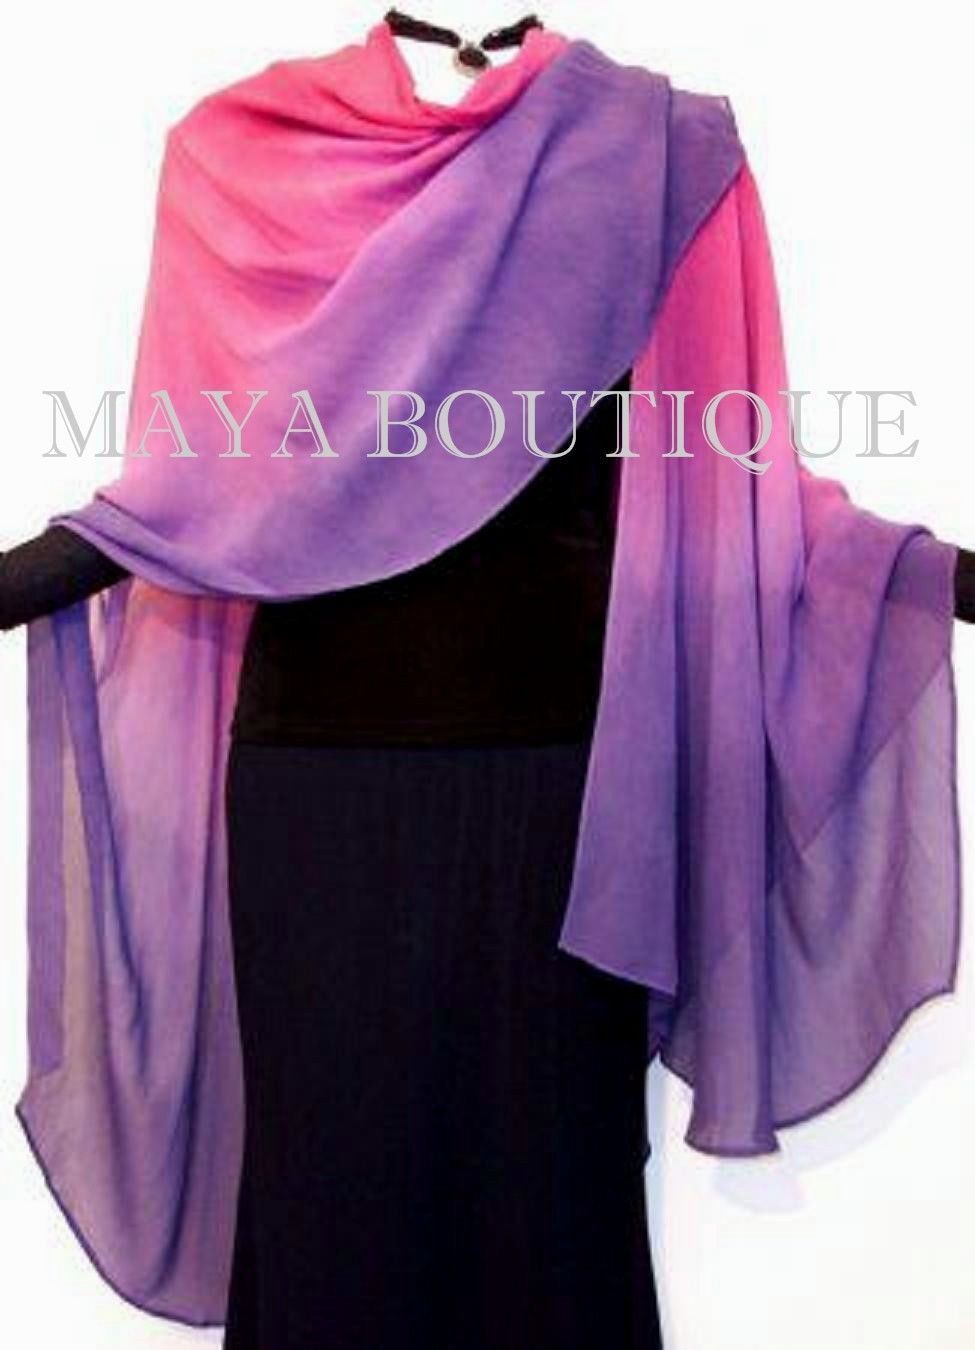 Hand Dyed Maya Matazaro Silk Chiffon Cape Ruana Caftan Wrap Magenta Purple Ombre